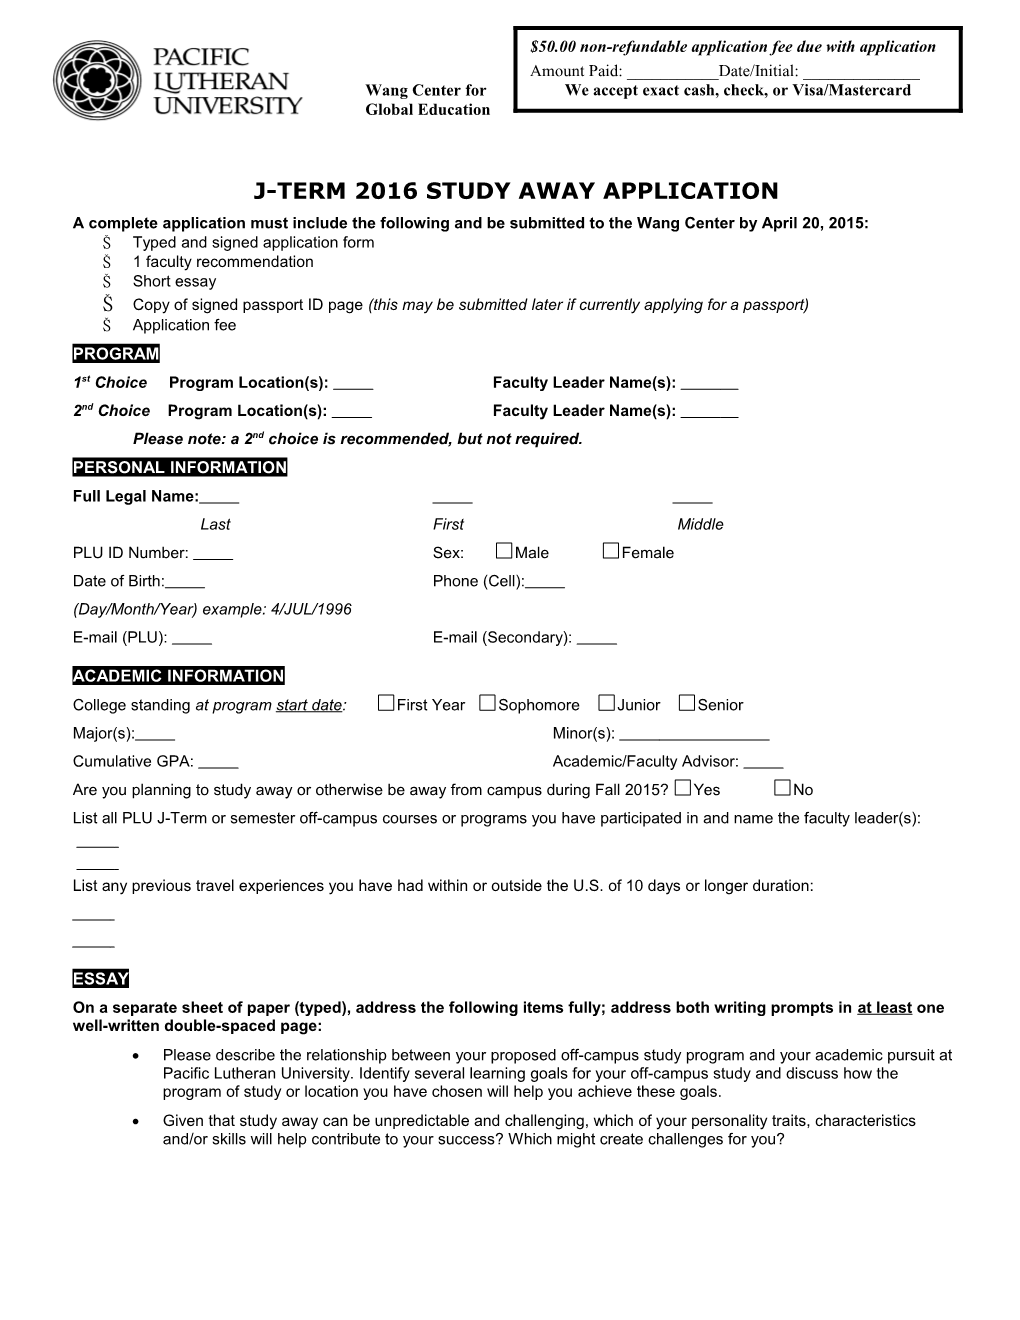 J-Term 2016 Study Away Application